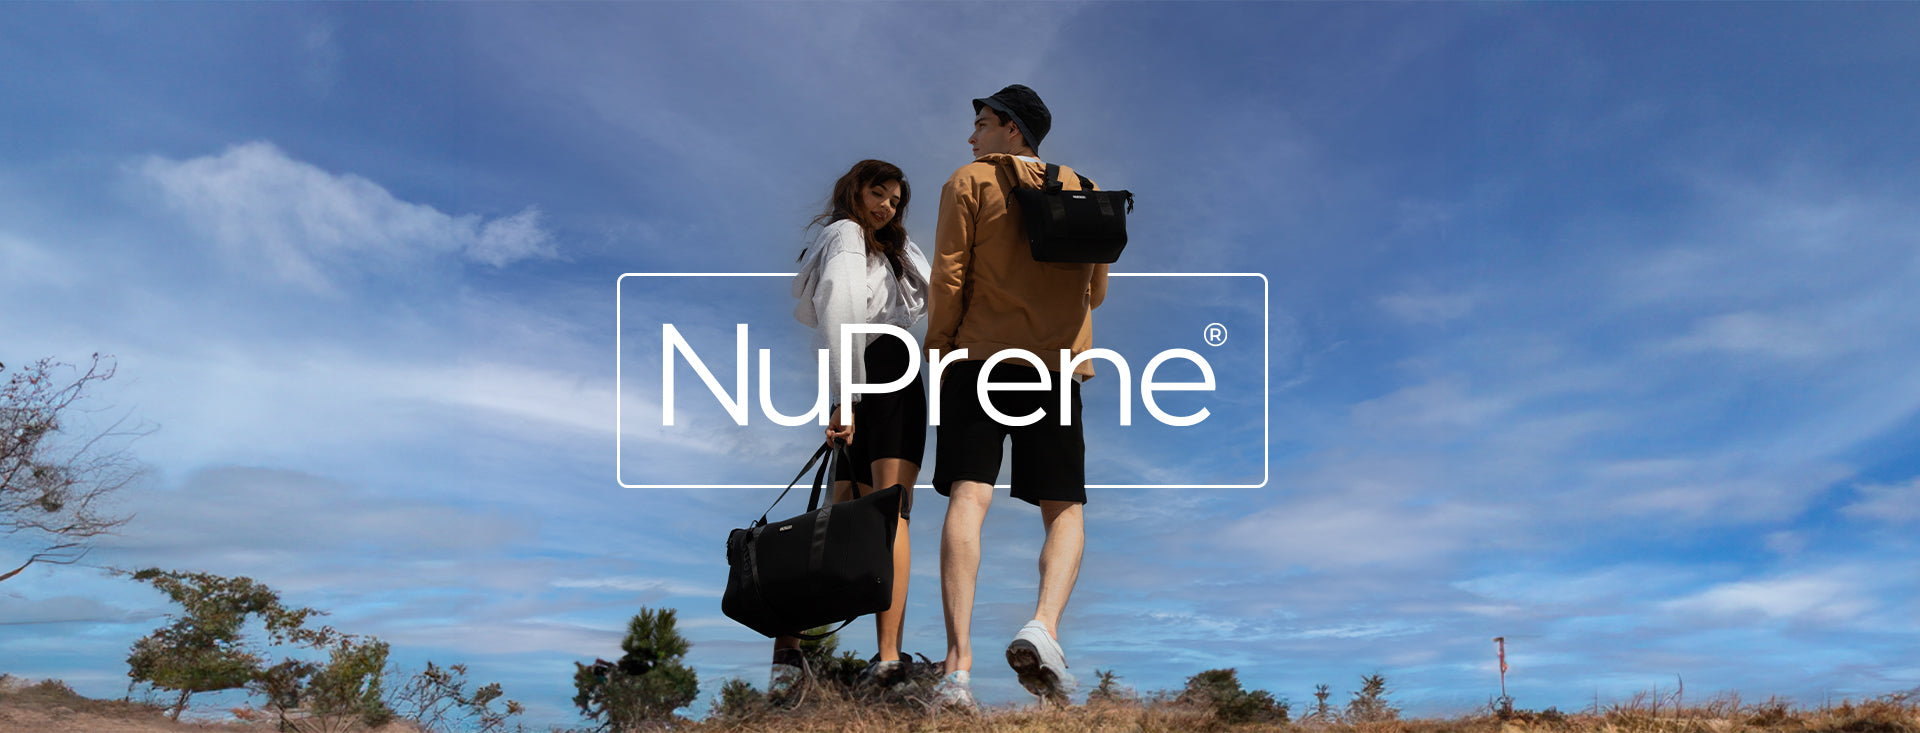 Discover Nuprene, Top-quality Mini Travel & Neoprene Bags Philippines –